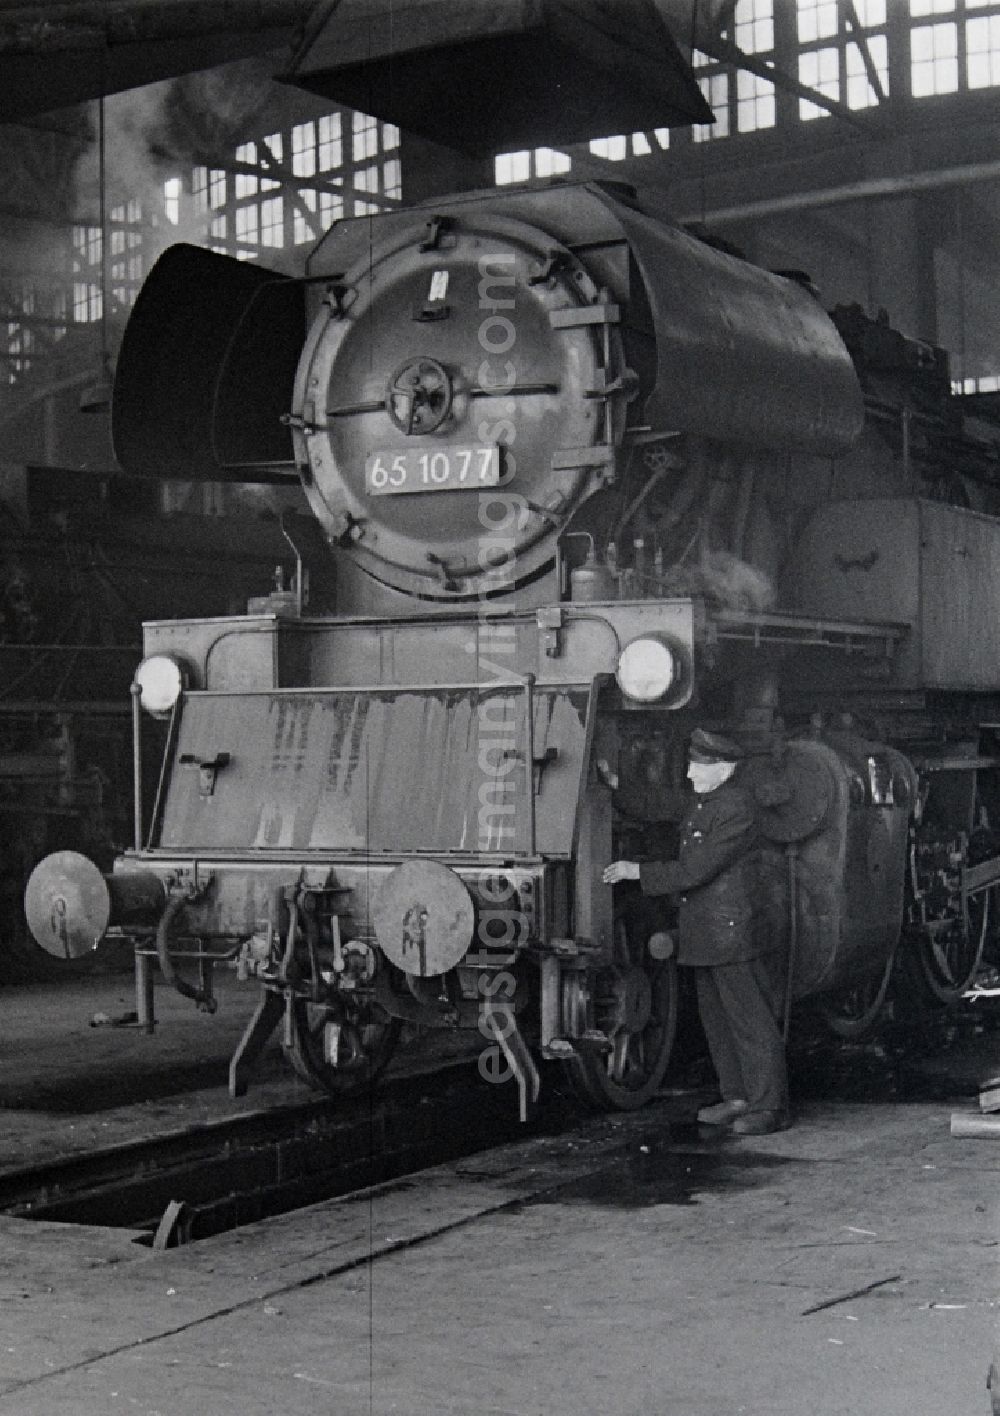 Halberstadt: Maintenance and repair work in the Bw railway depot of the Deutsche Reichsbahn for the series 5